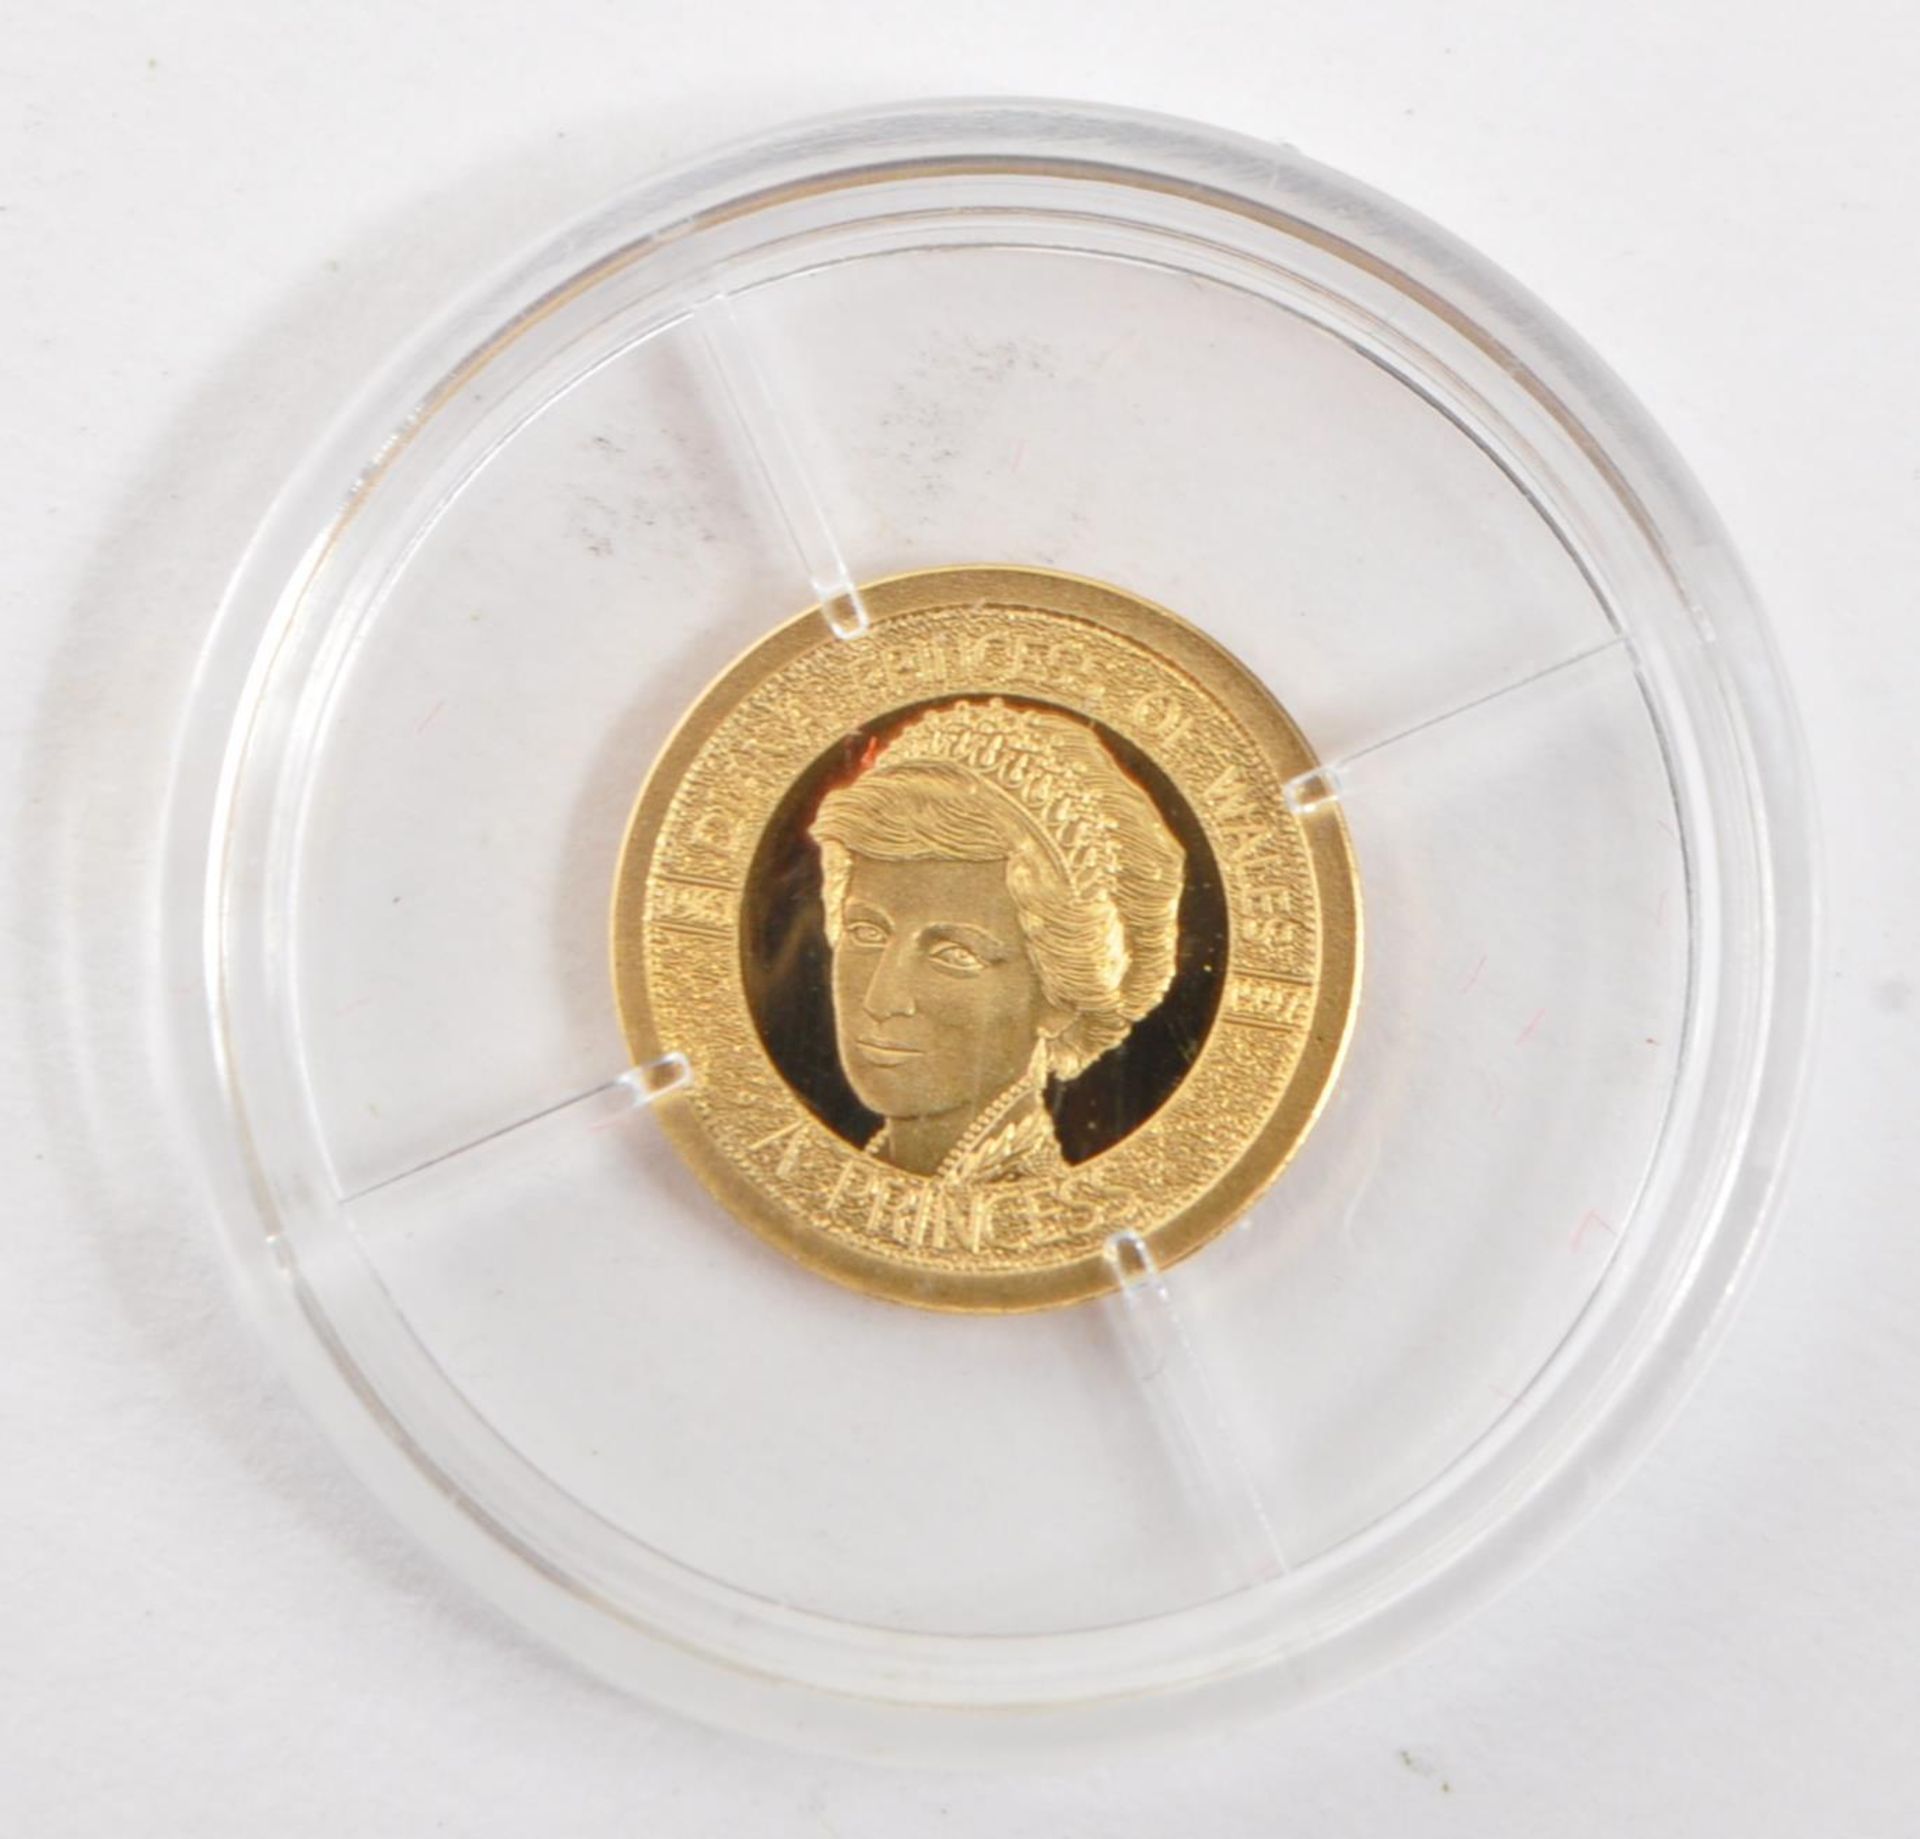 WINDSOR MINT - TWO FOURTEEN KARAT GOLD DIANA COINS - Image 4 of 5